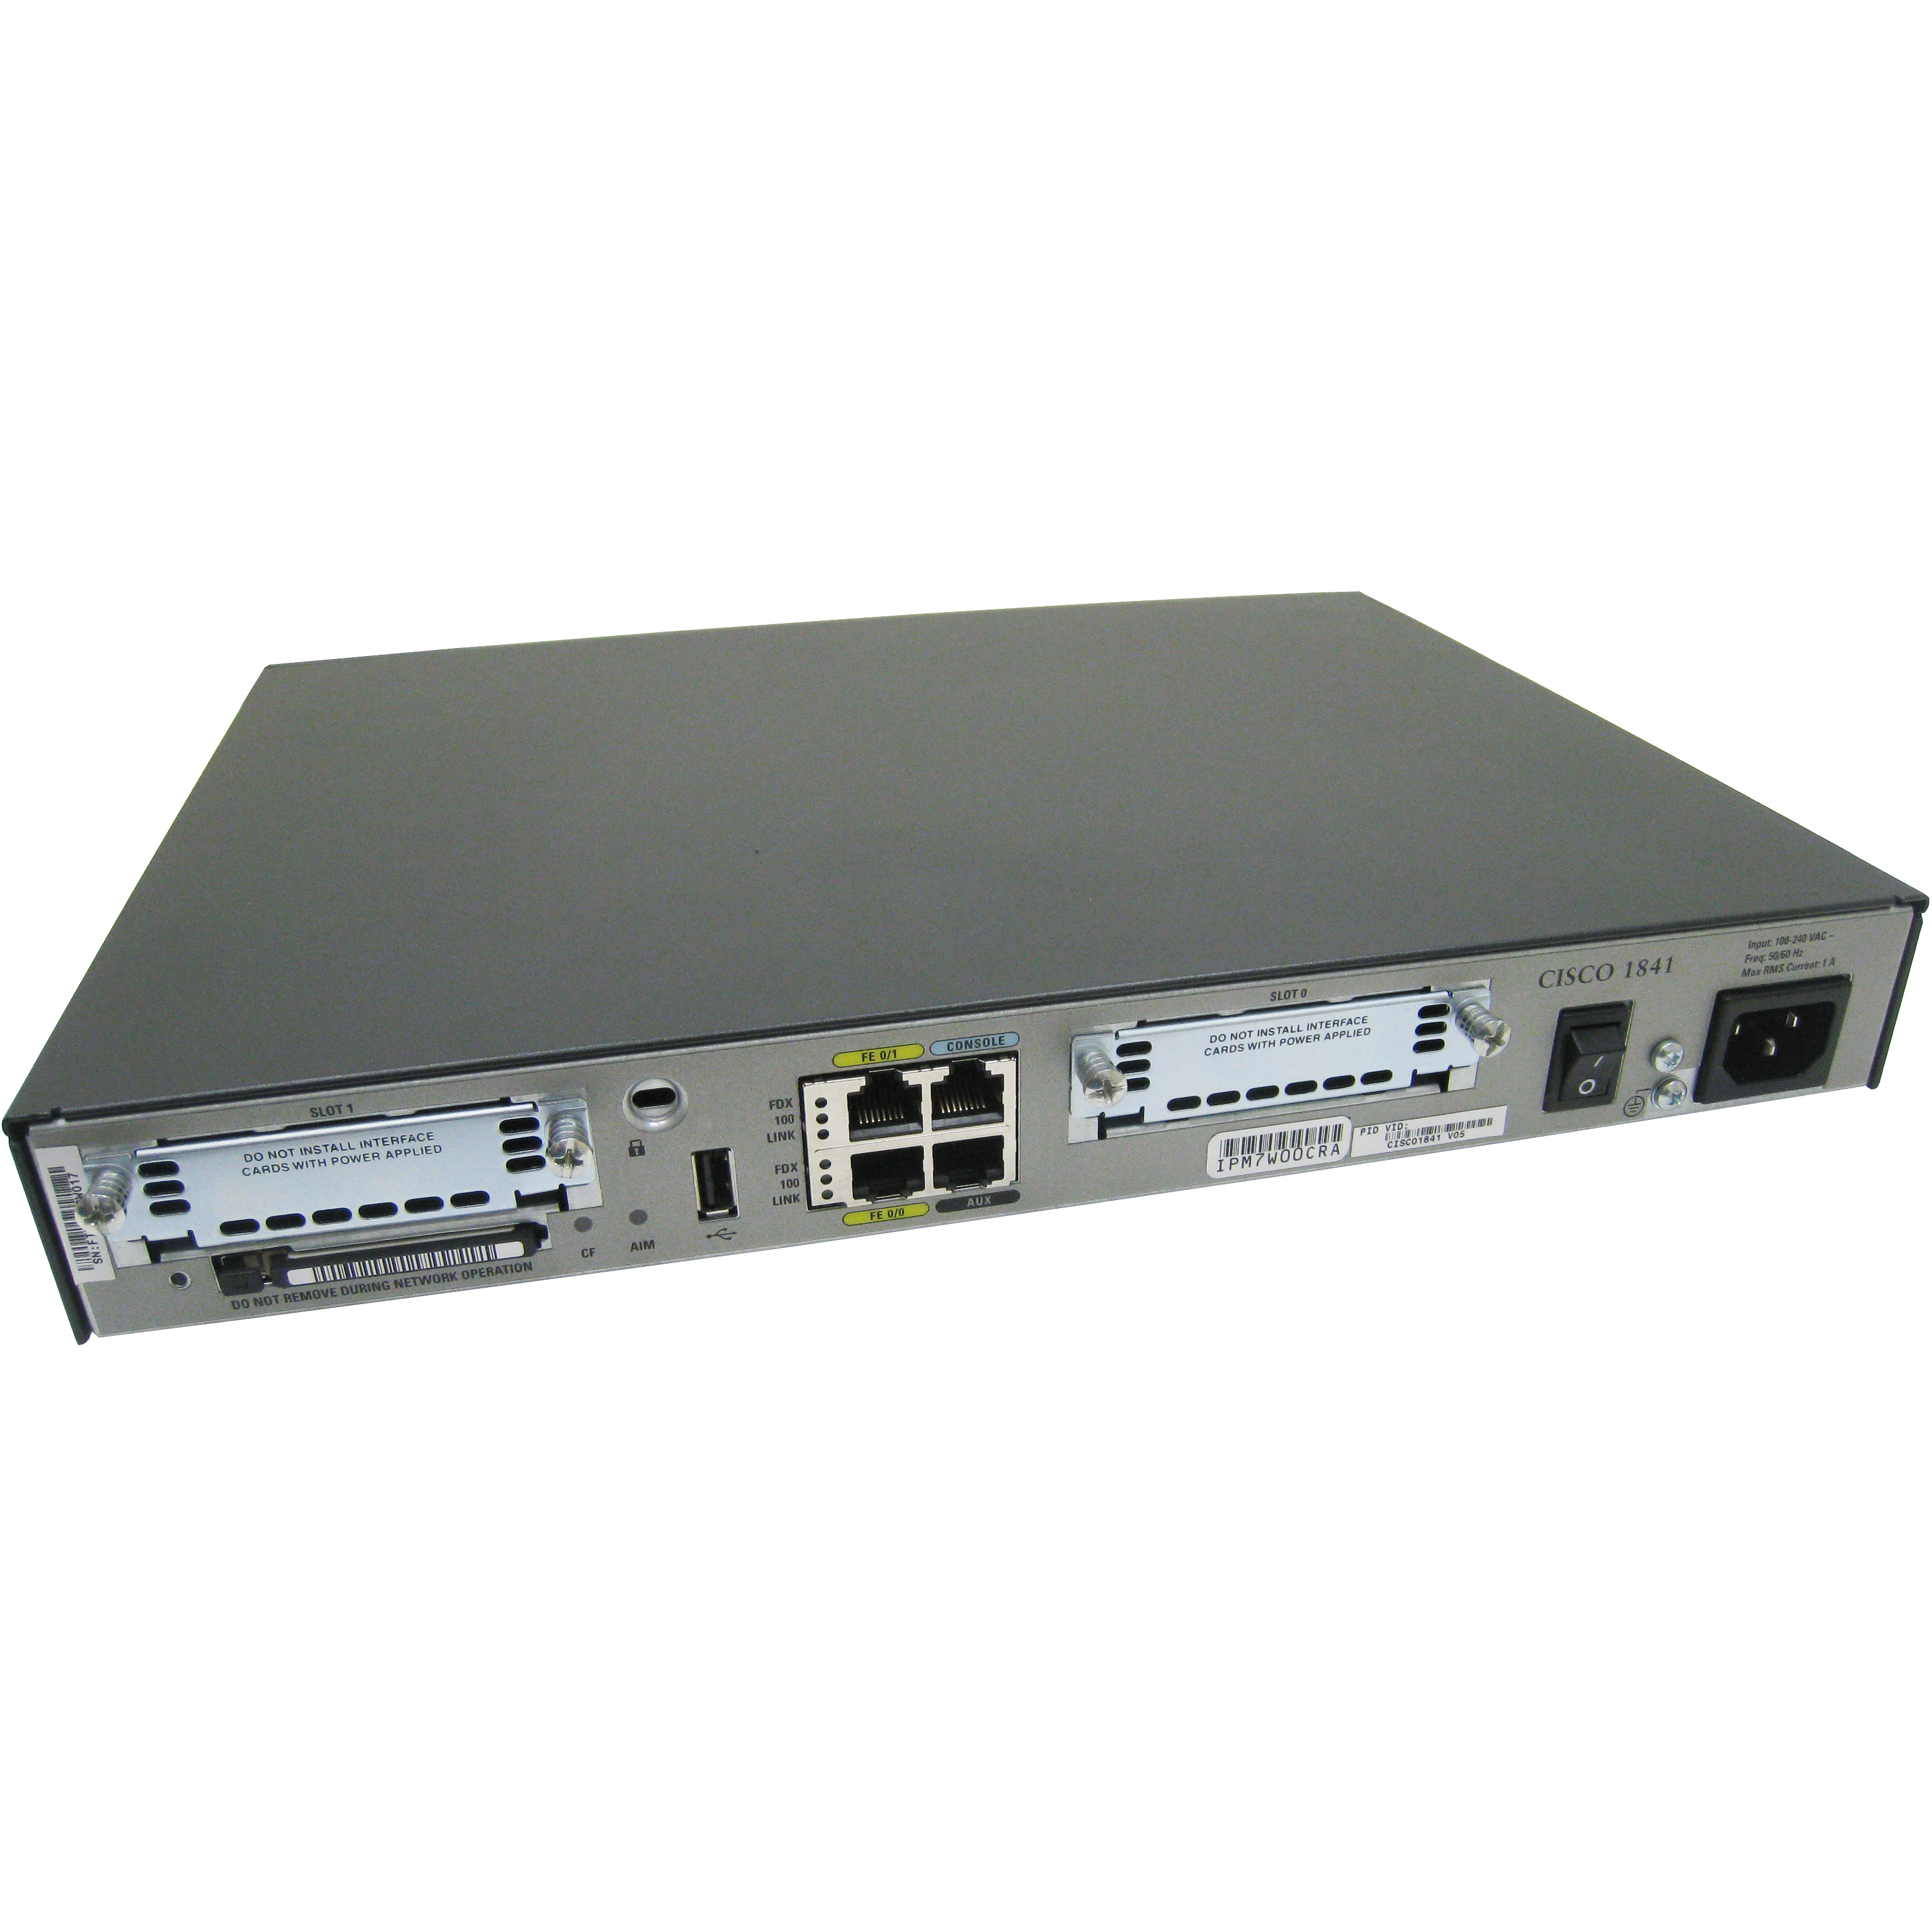 Cisco CISCO1841-HSEC/K9-BPII+